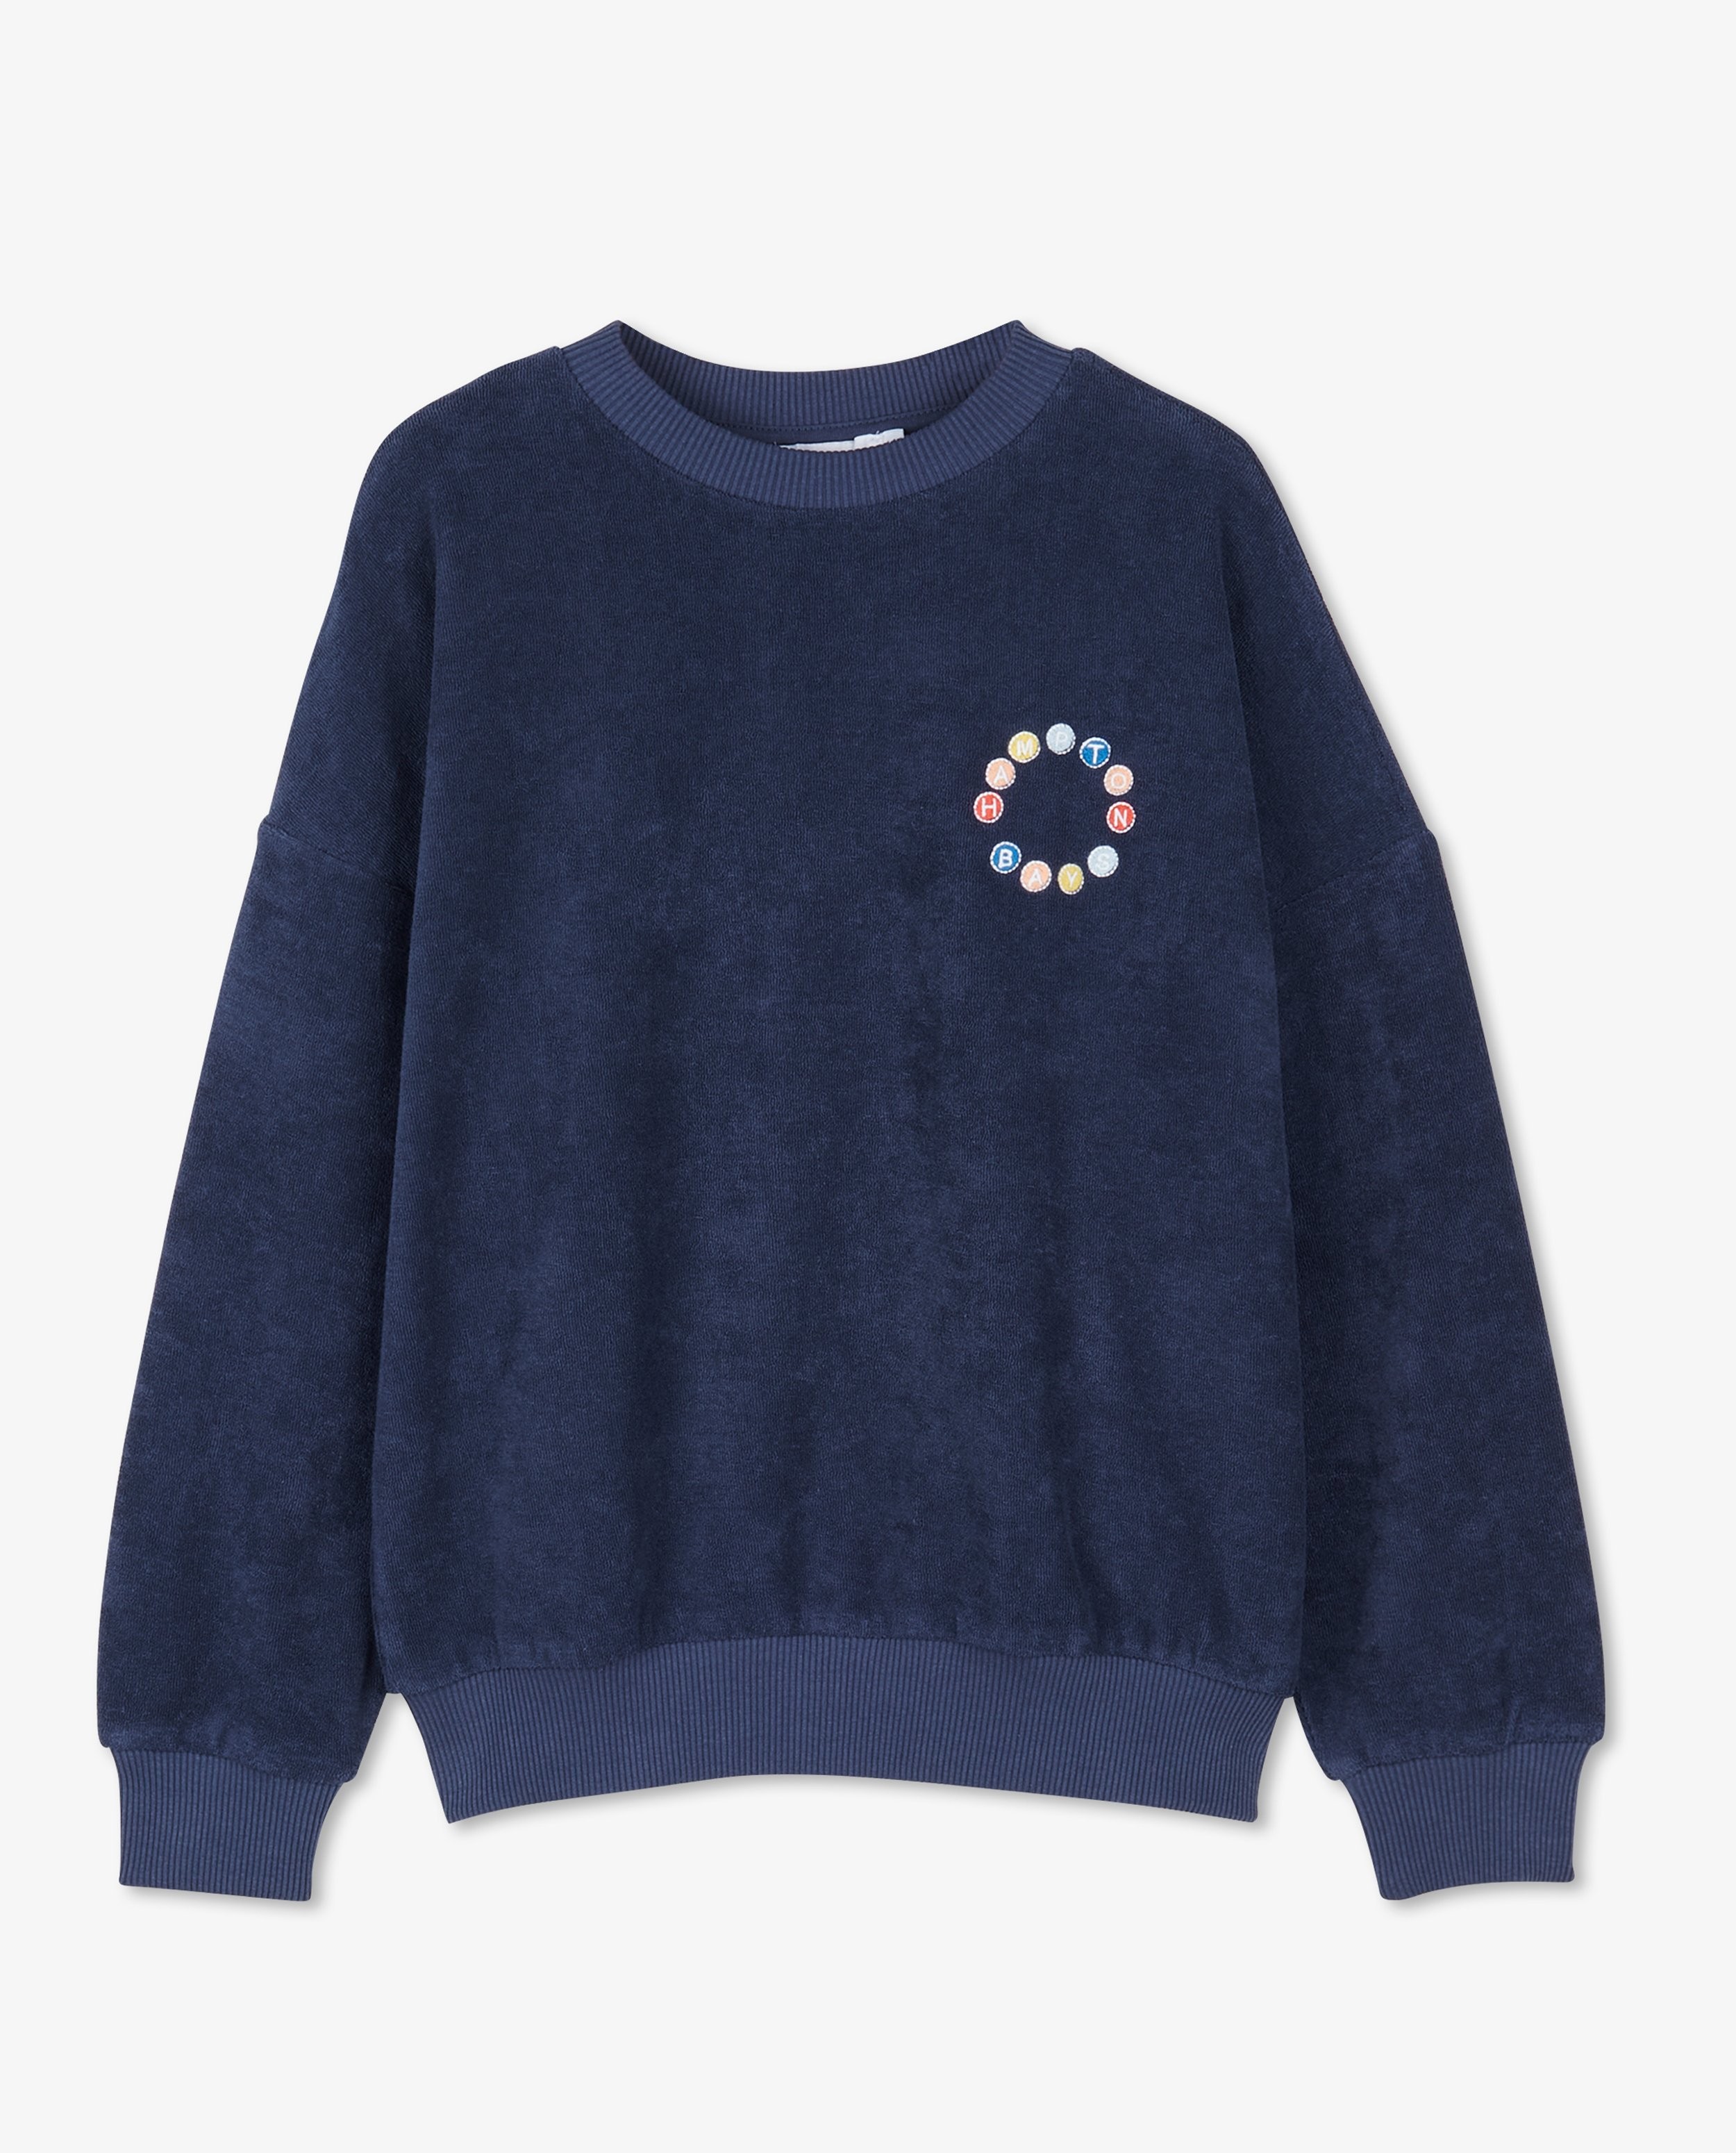 Sweaters - Blauwe sweater Hampton Bays